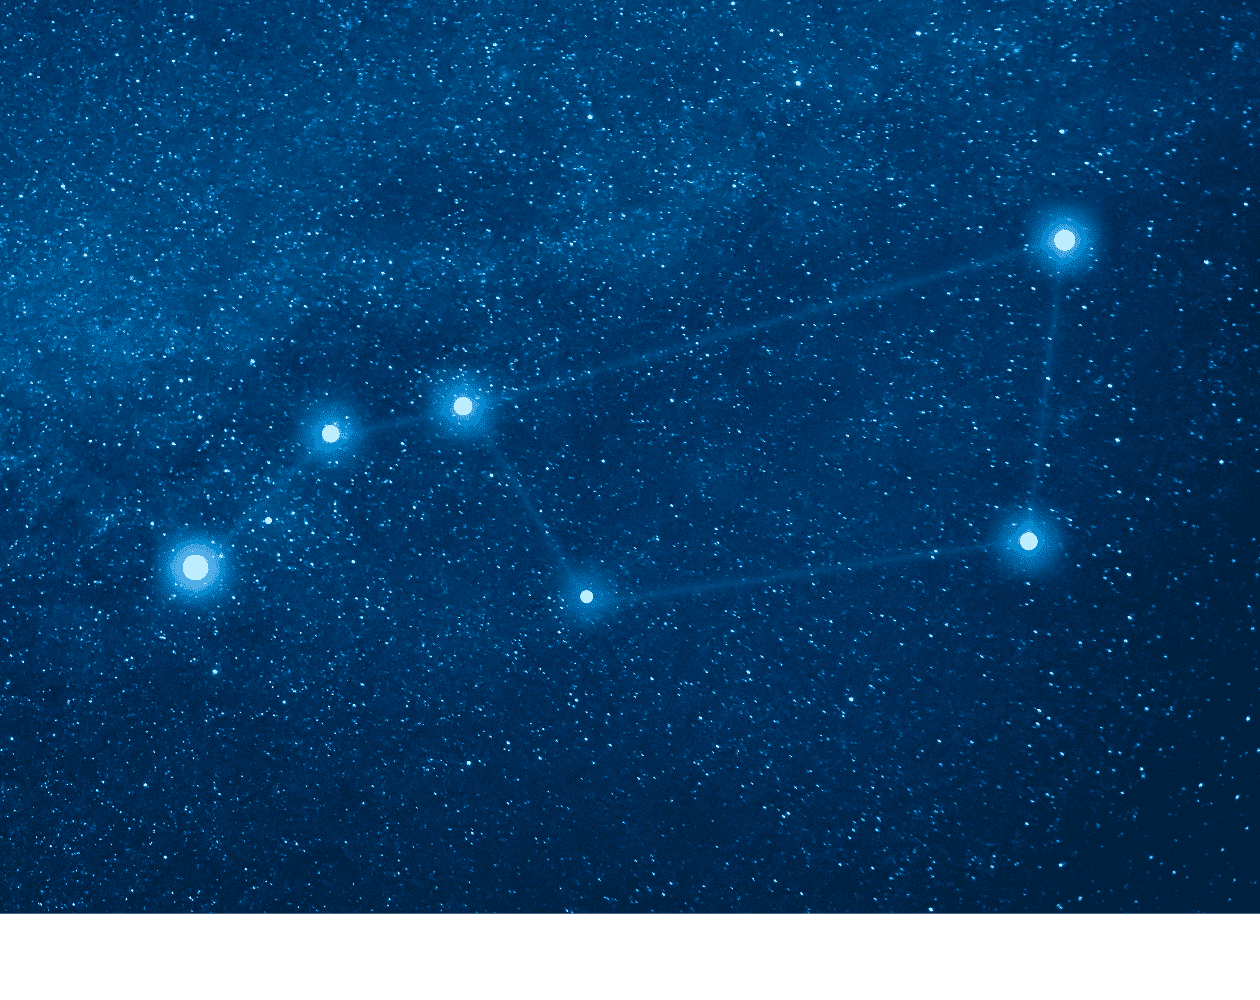 Name a Star - Buy a star - receive a star kit - Global Star Registry™